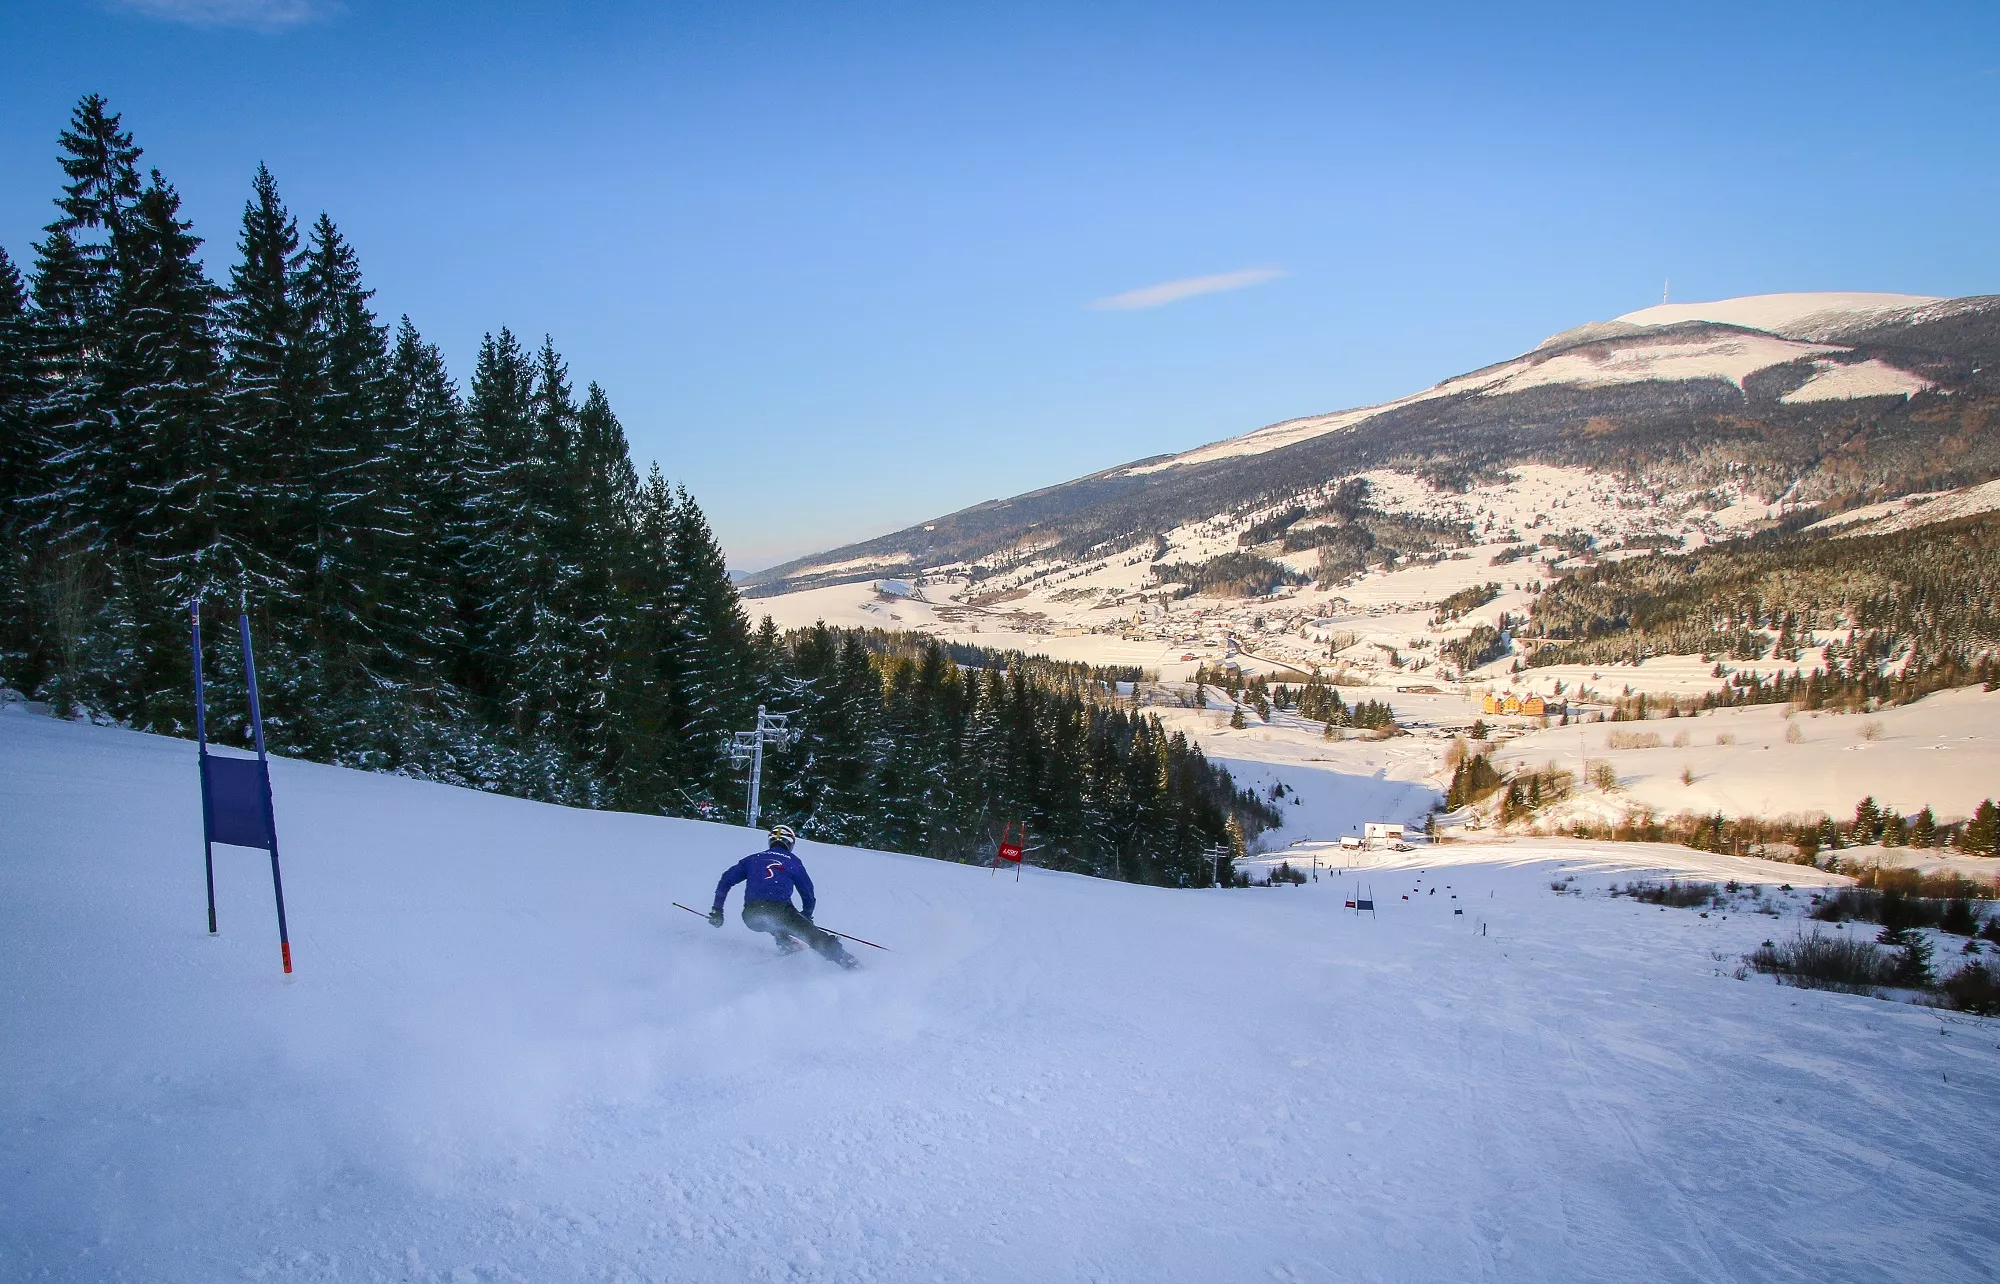 Ski Telgart in Slovakia, Europe | Snowboarding,Skiing - Rated 3.8